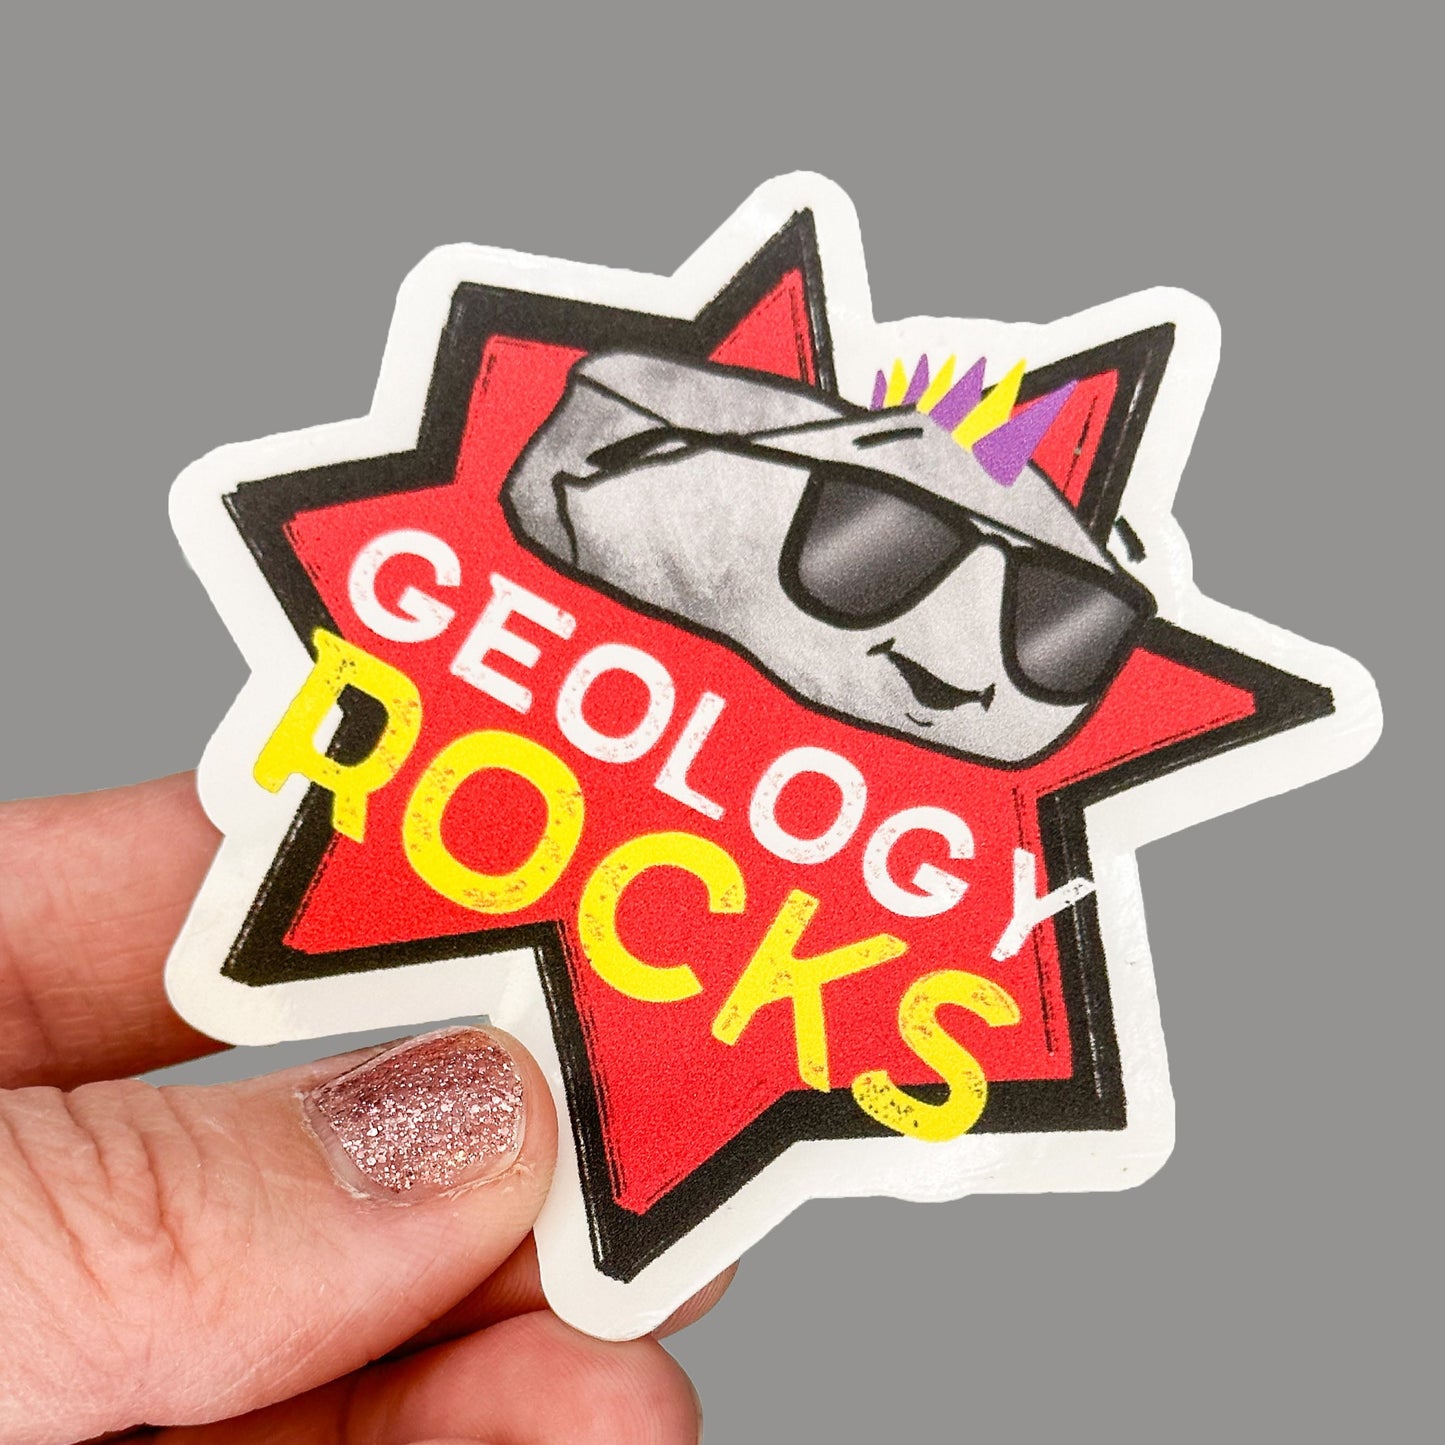 Hales Yeah Design Geology Sticker ~3" at Longest Edge